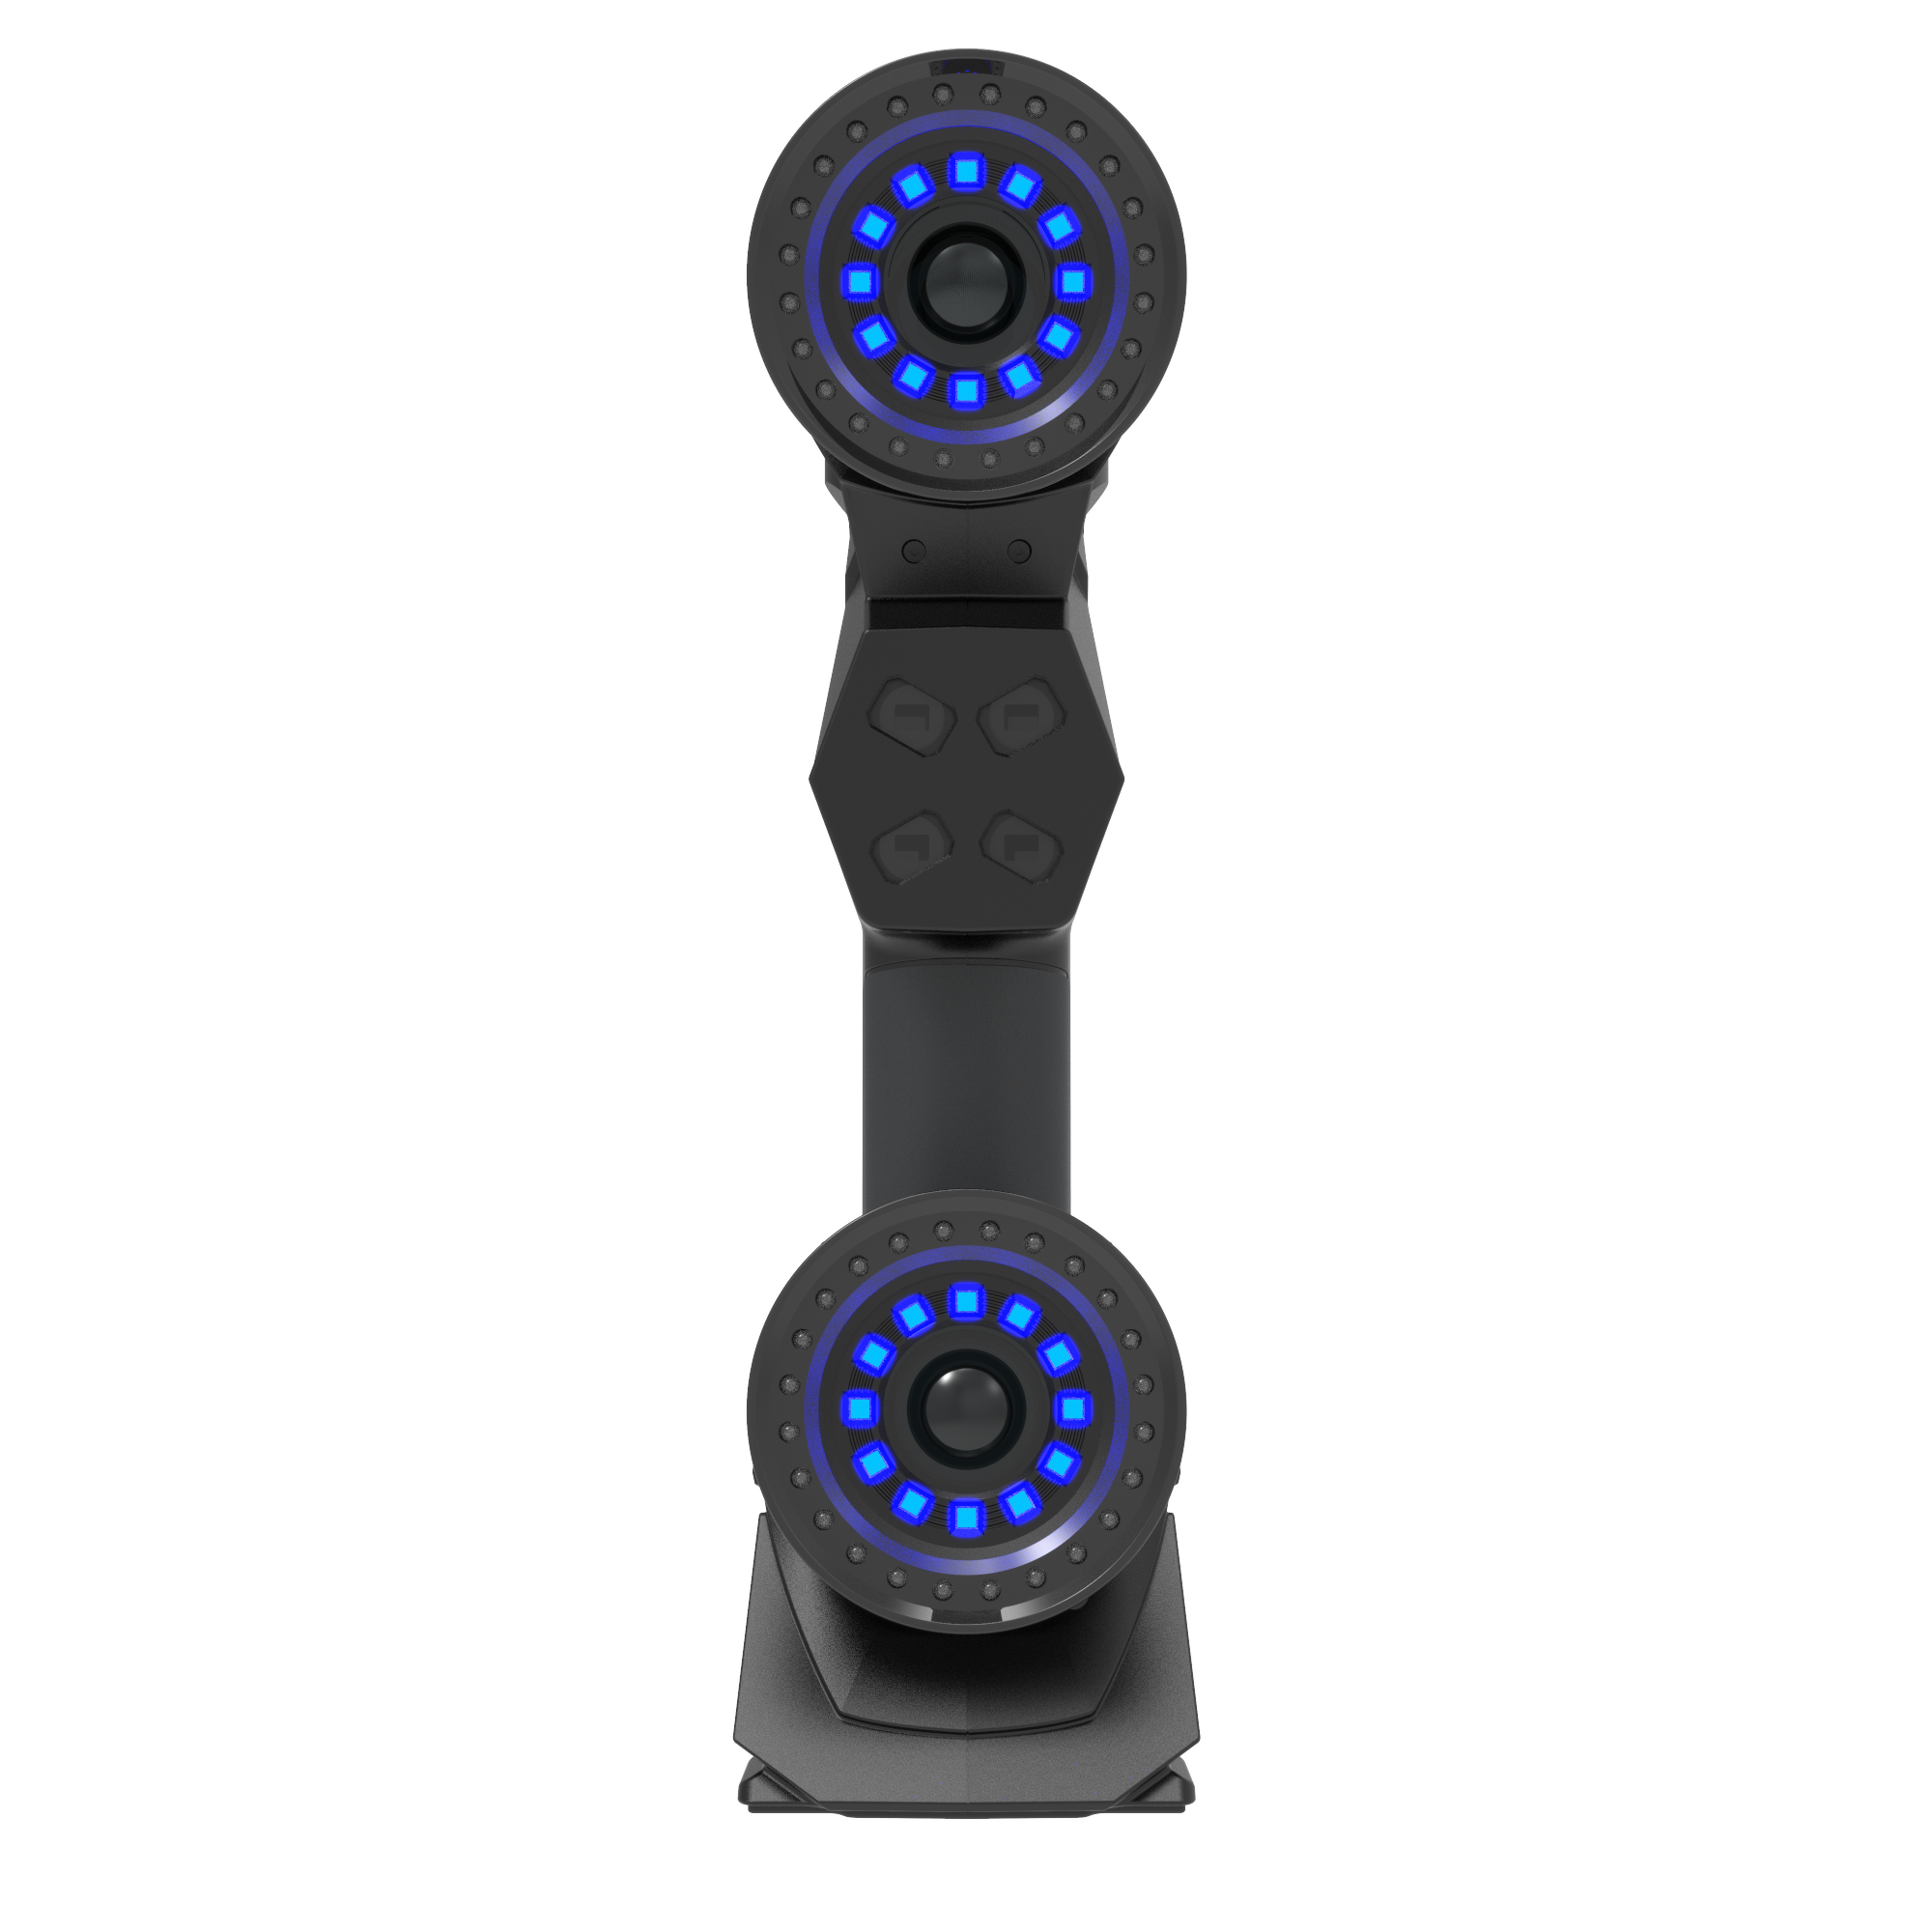 Scanner 3D a luce blu senza marcatori MarvelScan Tracker per misurazioni senza contatto